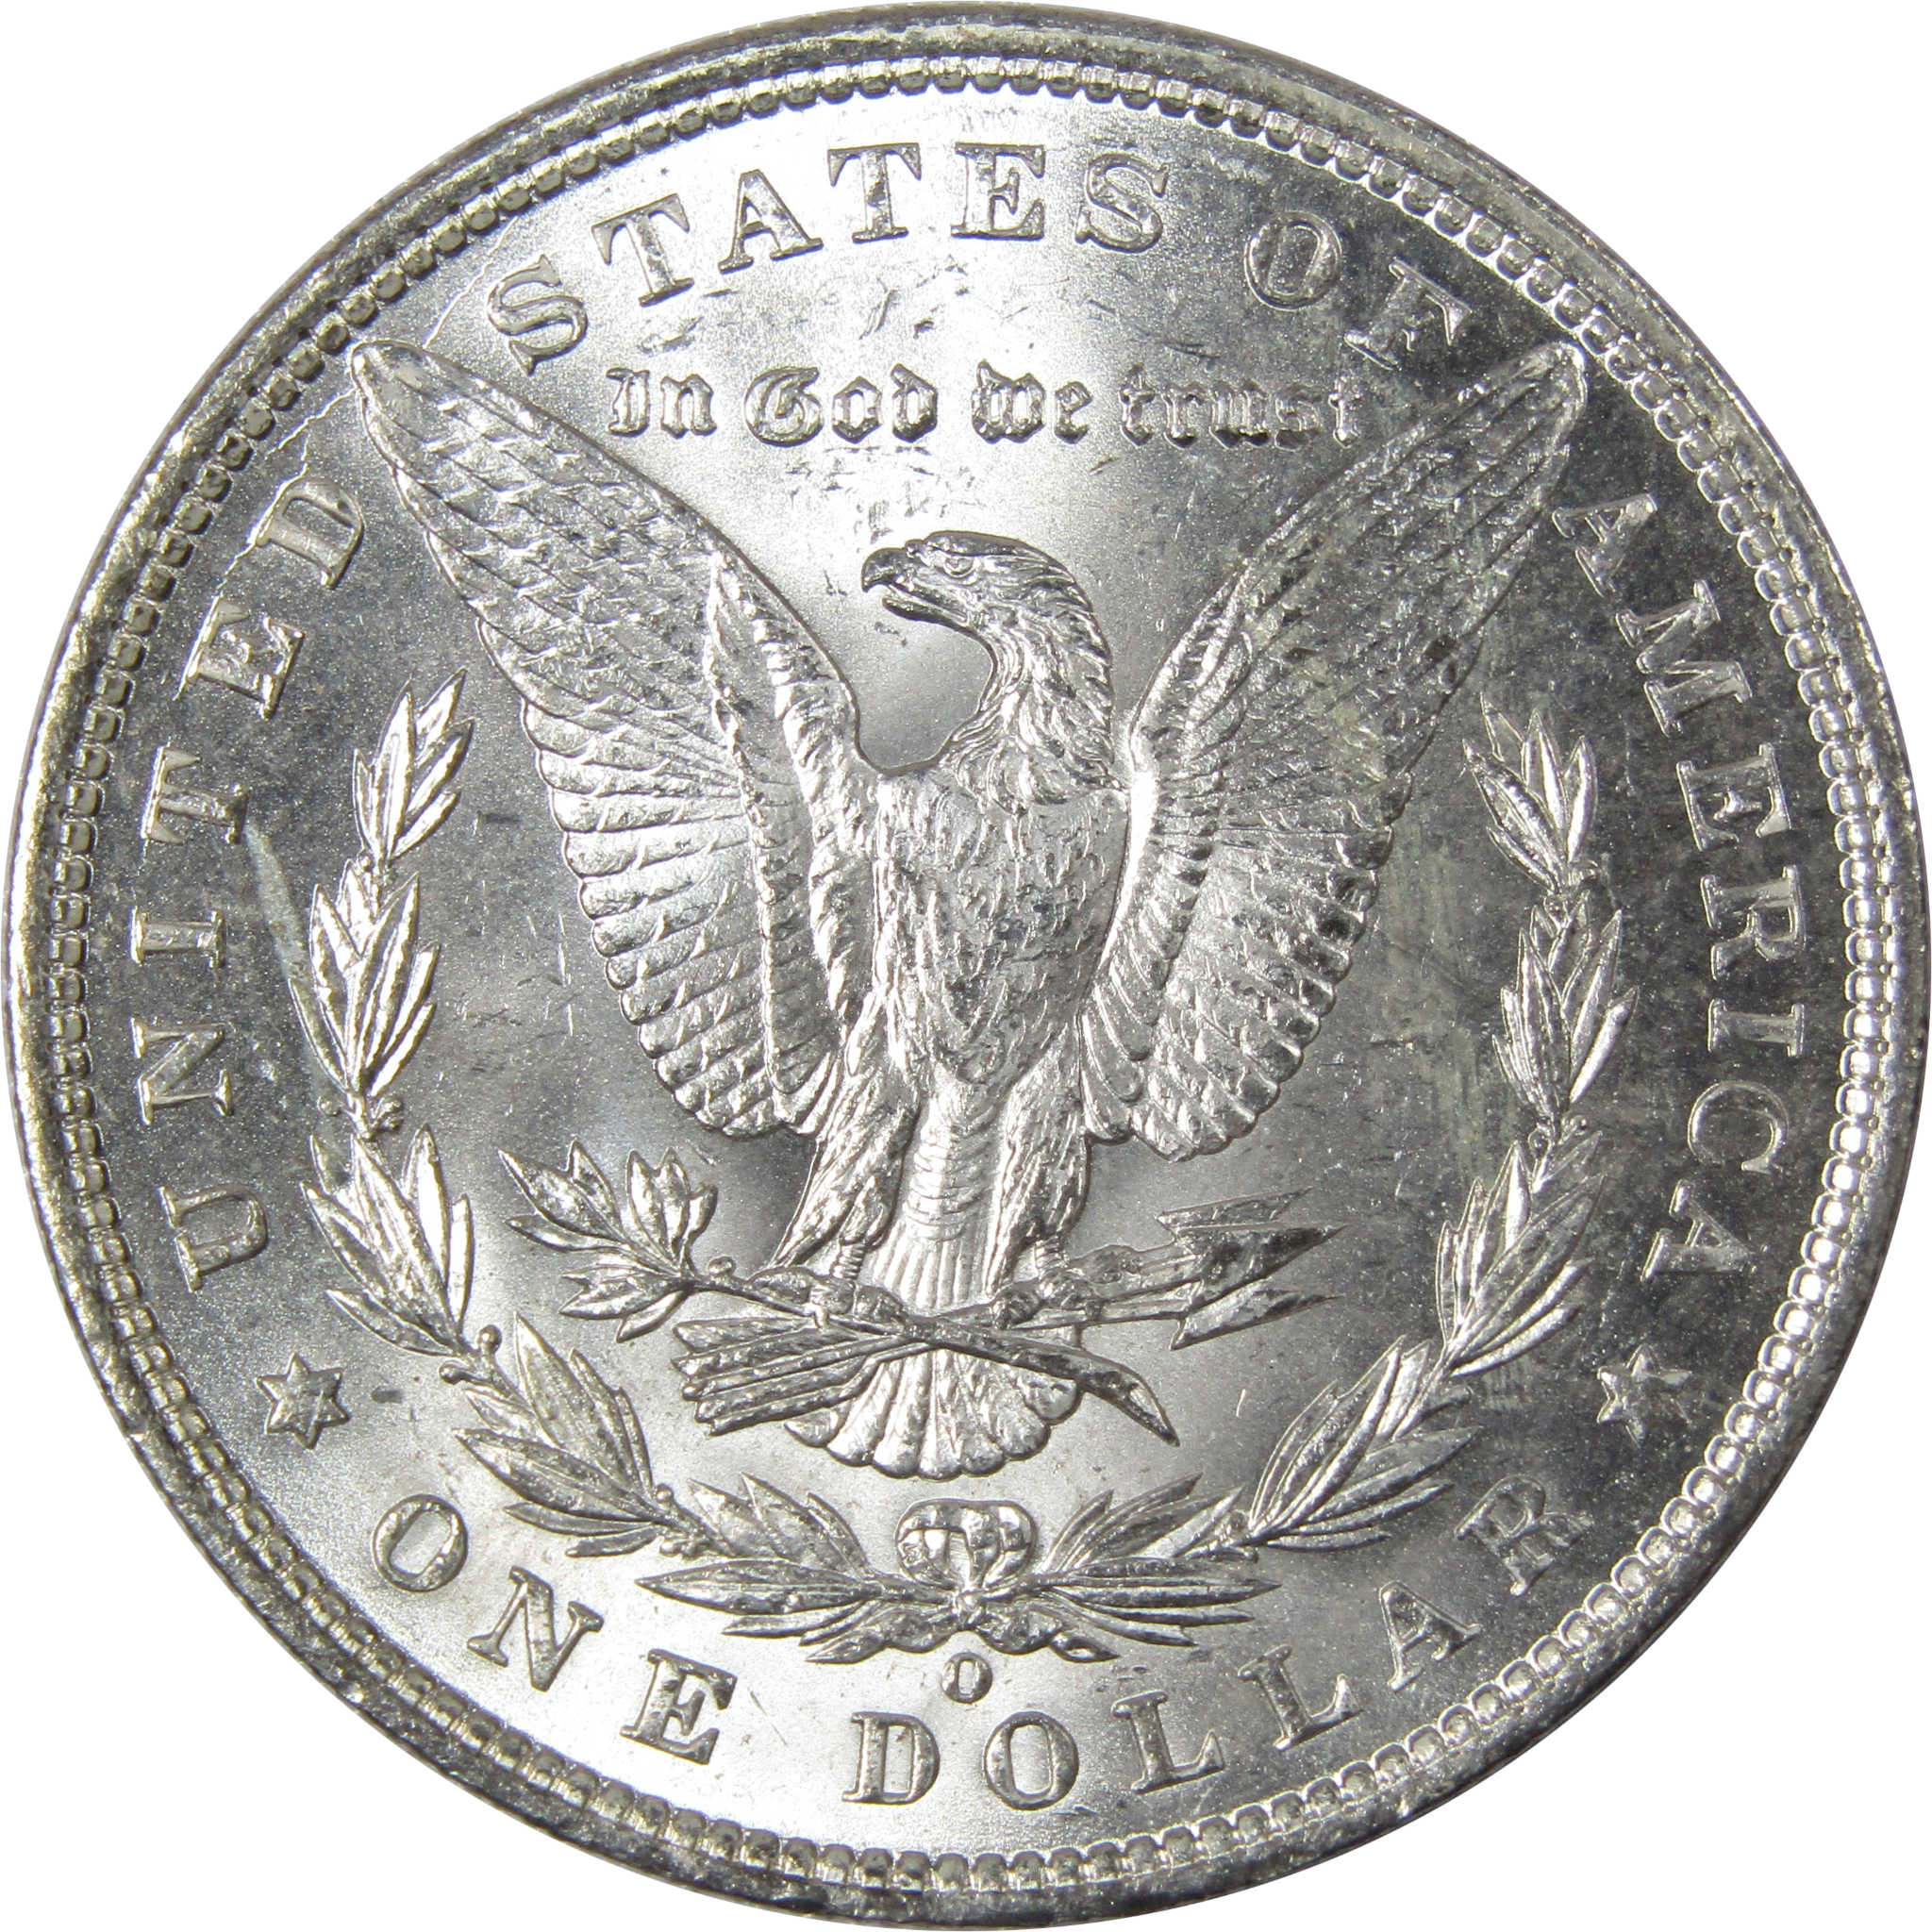 1900 O Morgan Dollar BU Uncirculated Mint State 90% Silver SKU:IPC9729 - Morgan coin - Morgan silver dollar - Morgan silver dollar for sale - Profile Coins &amp; Collectibles